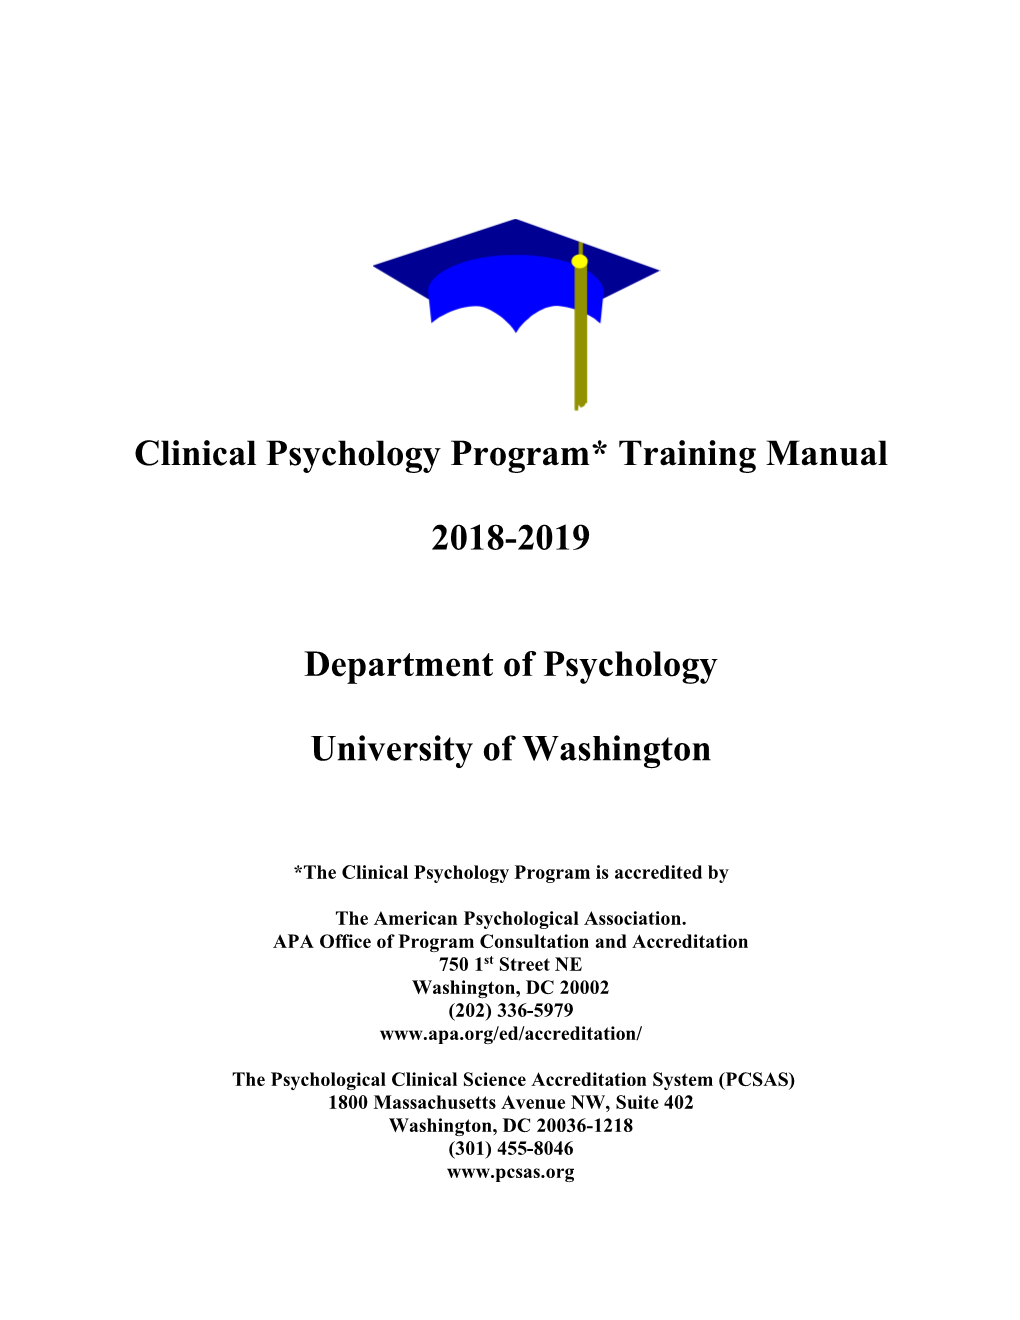 Clinical Psychology Program* Training Manual 2018-2019